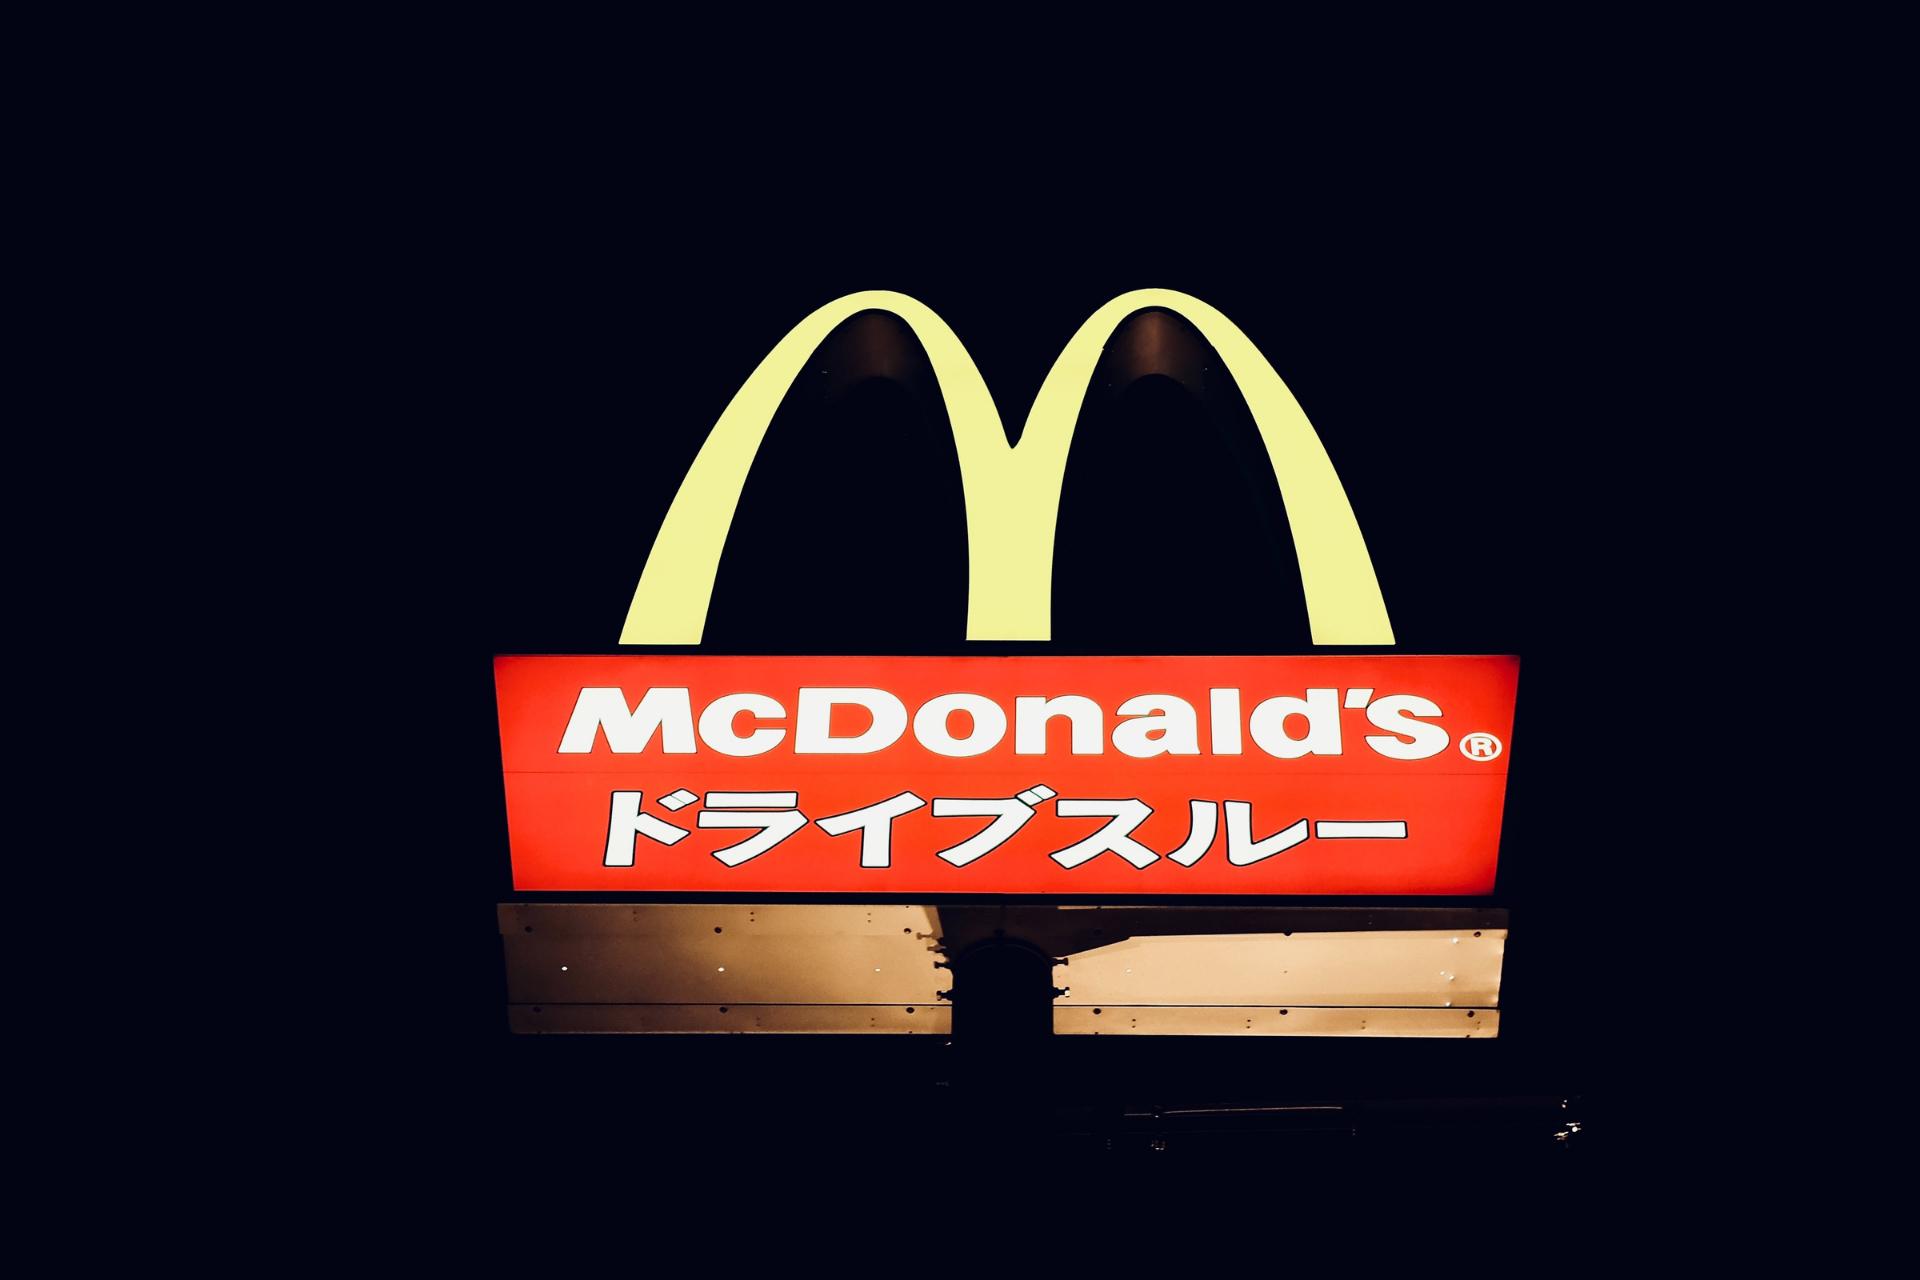 classic McDonald's chain restaurant